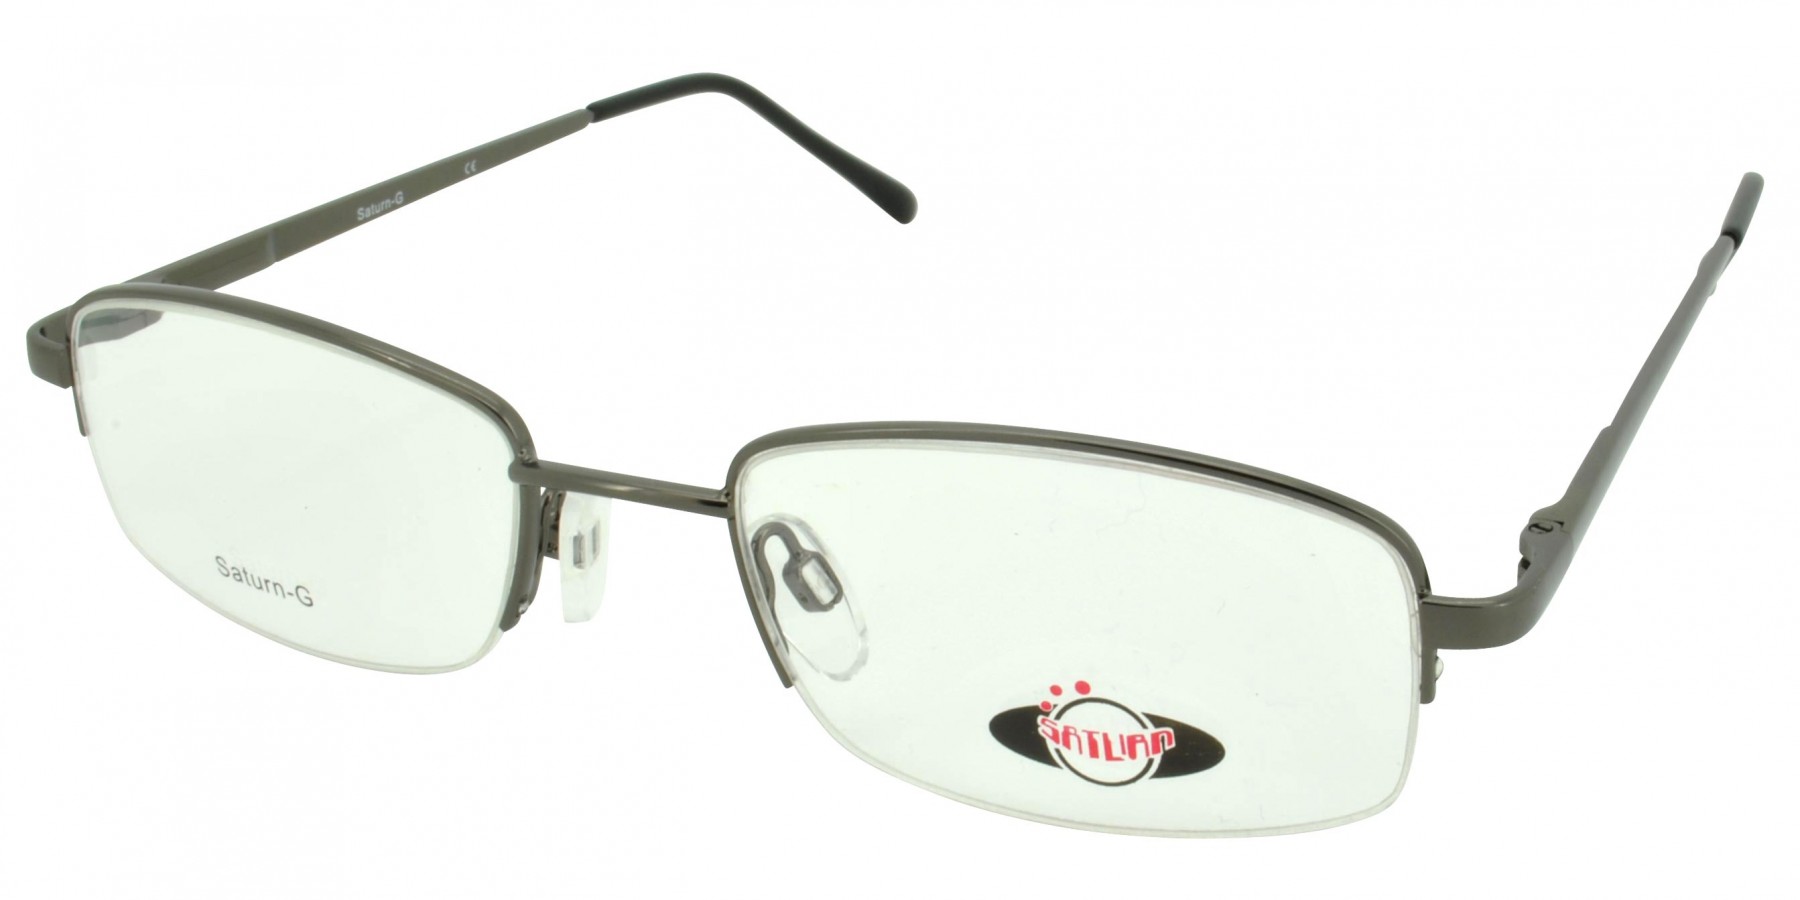 Saturn G Semi Rimless Frame Prescription Glasses